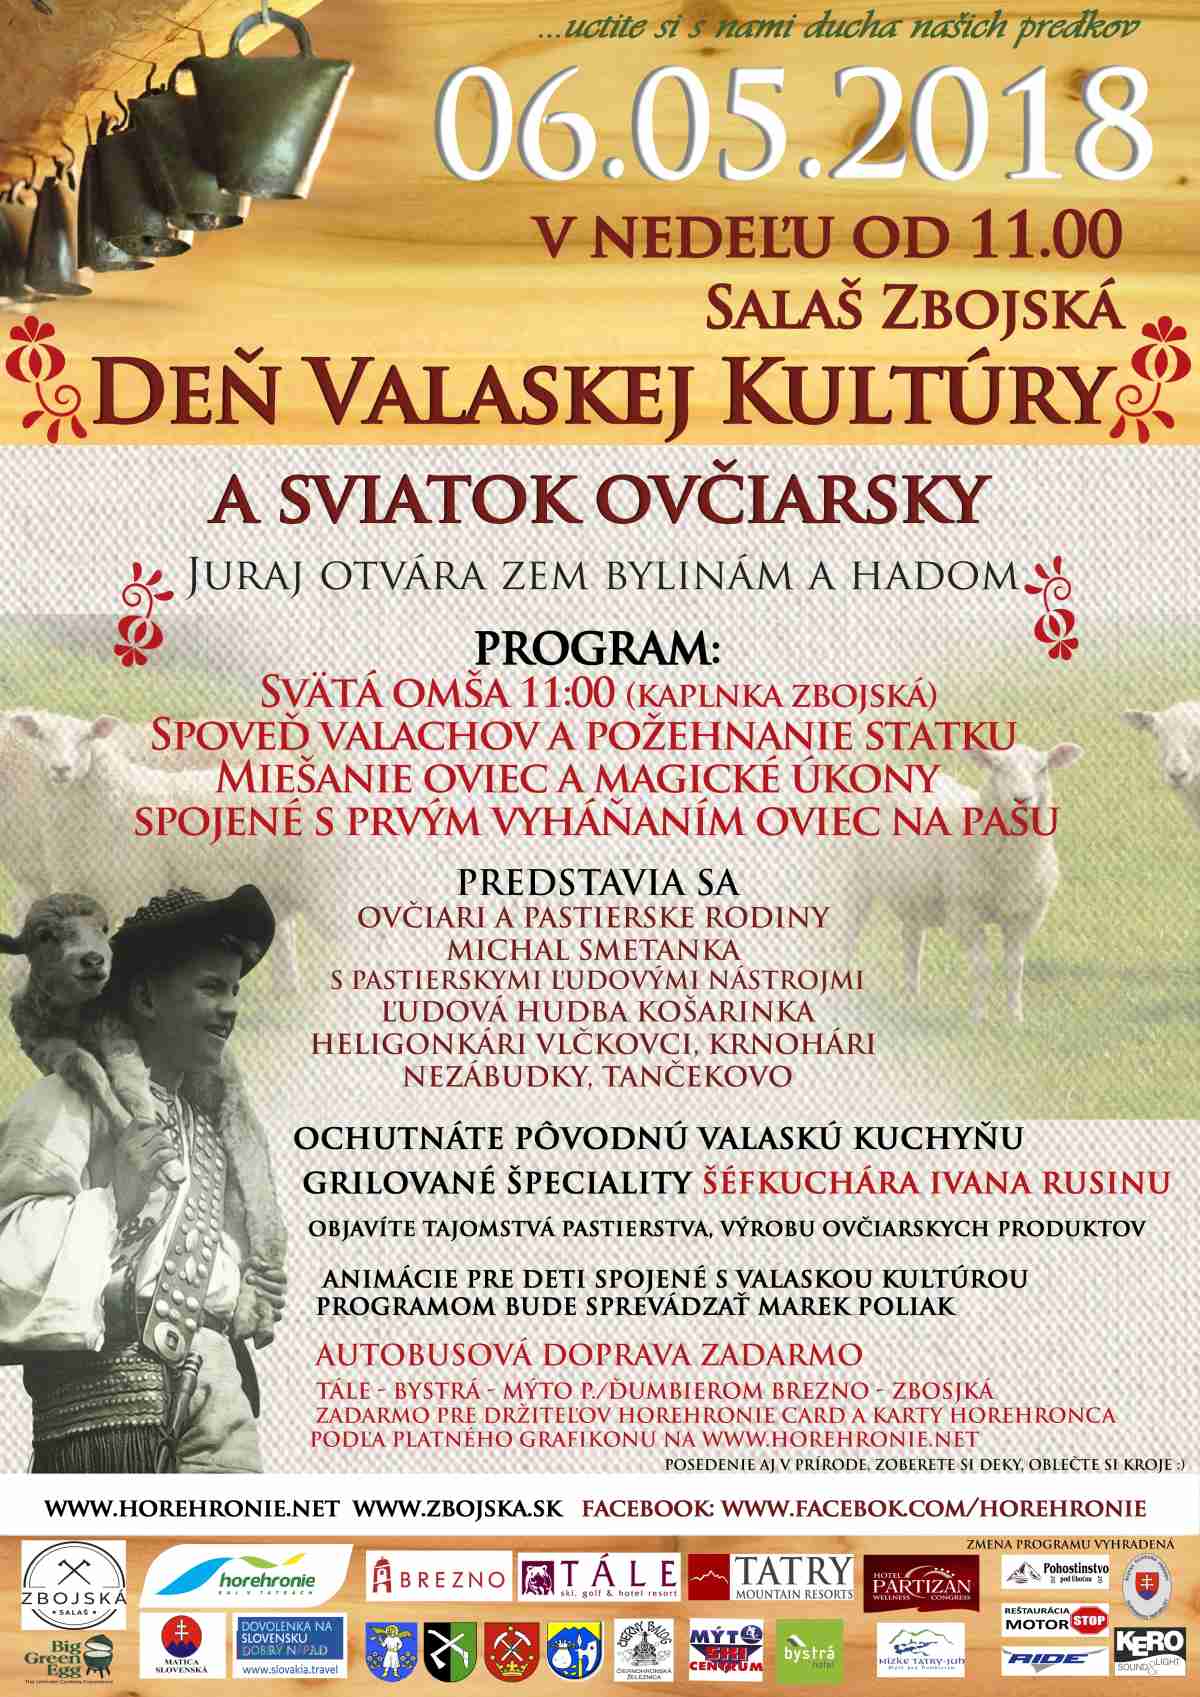 De valaskej kultry a sviatok oviarsky 2018 - Sala Zbojsk